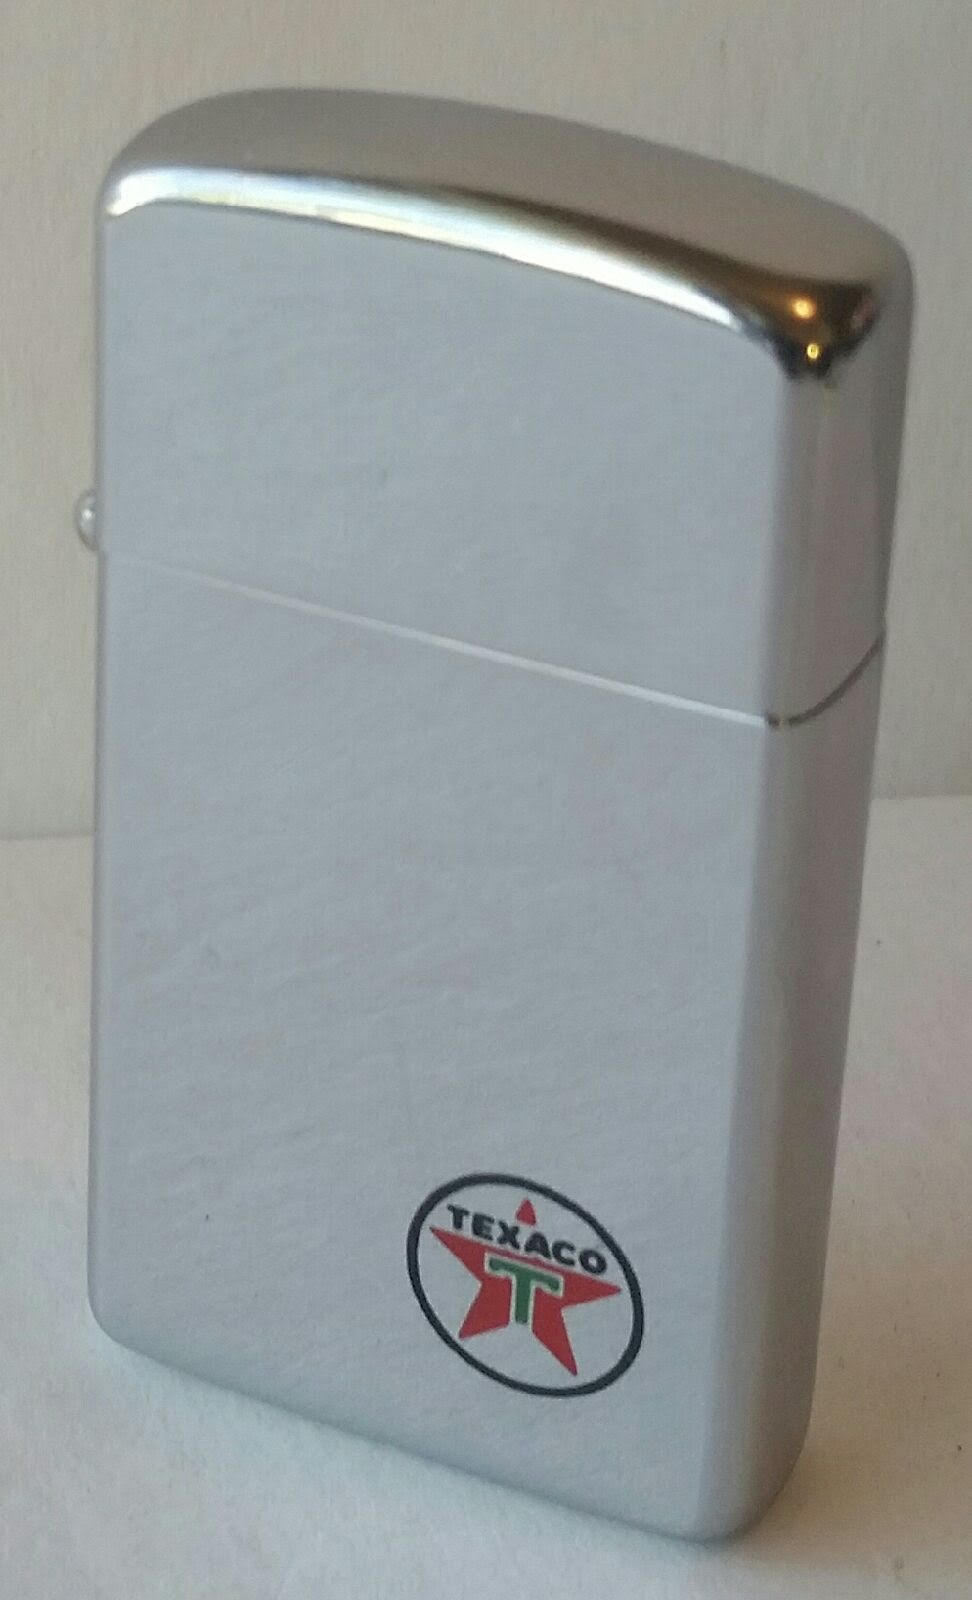 Zippo lighter Texaco 1964 new in box Slim high polish chrome 53 